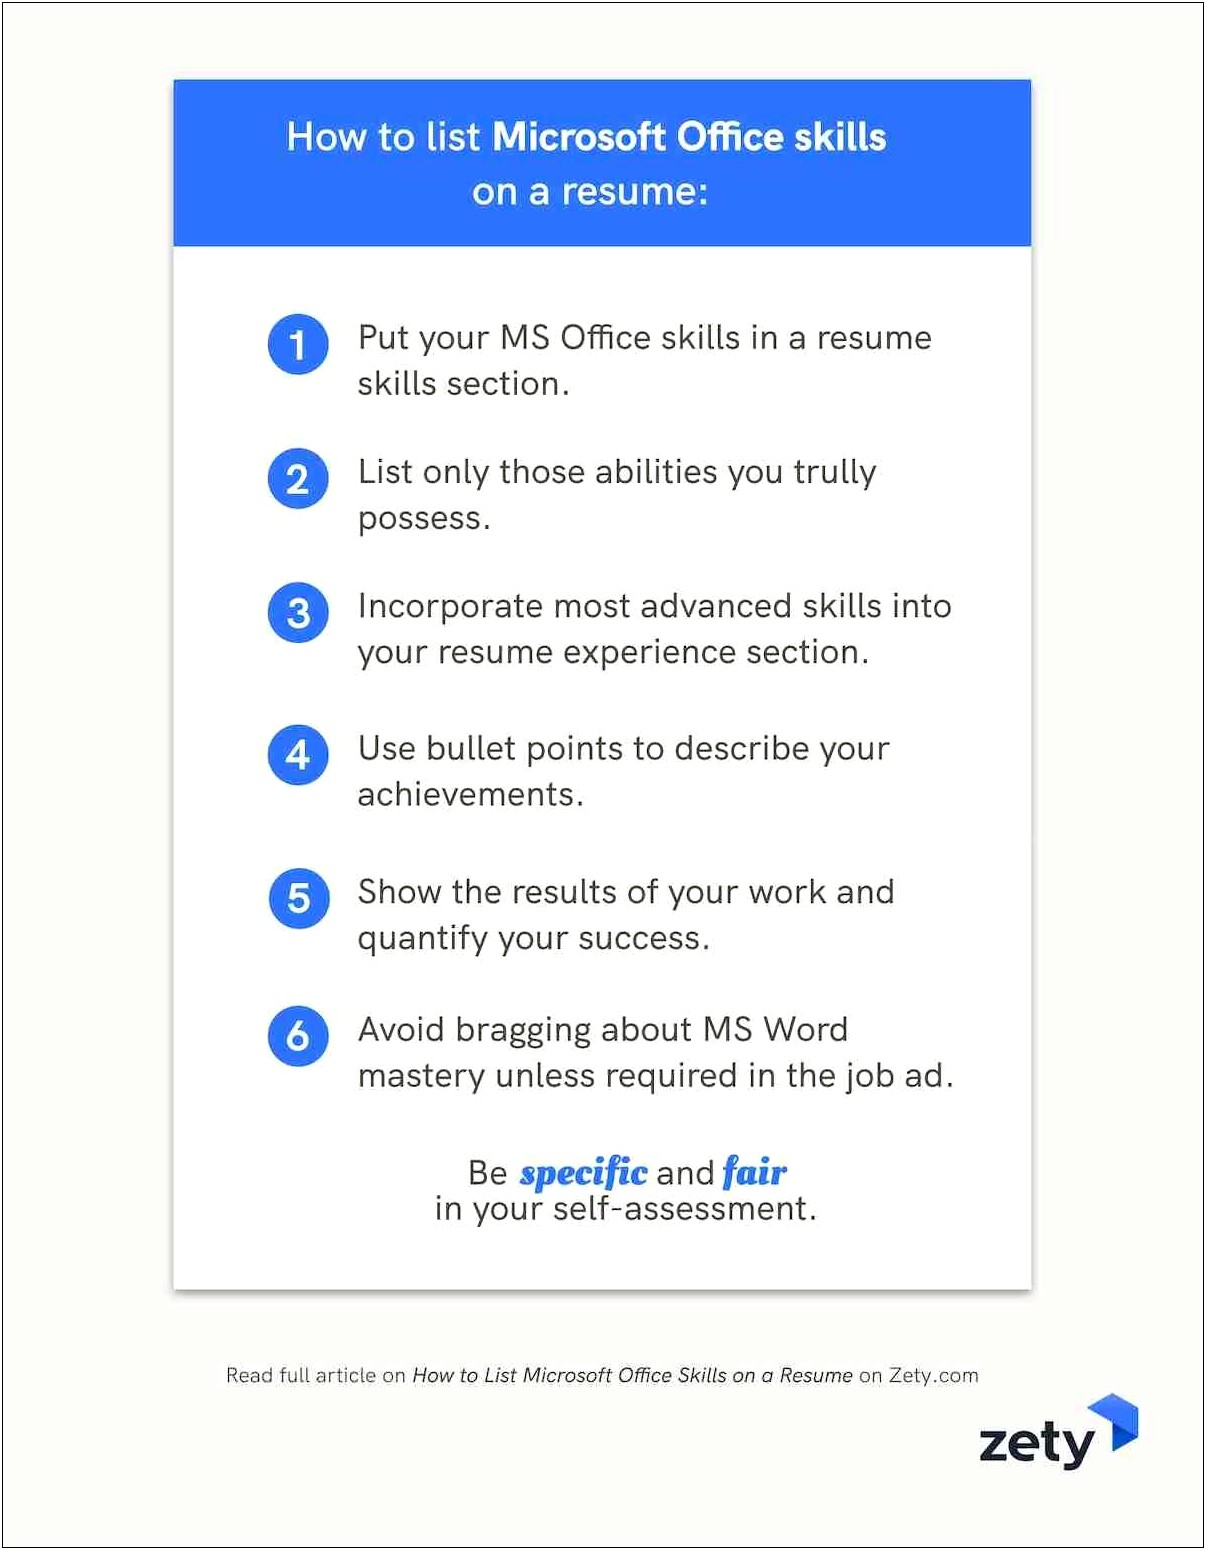 Office 365 Implementation Job Resume